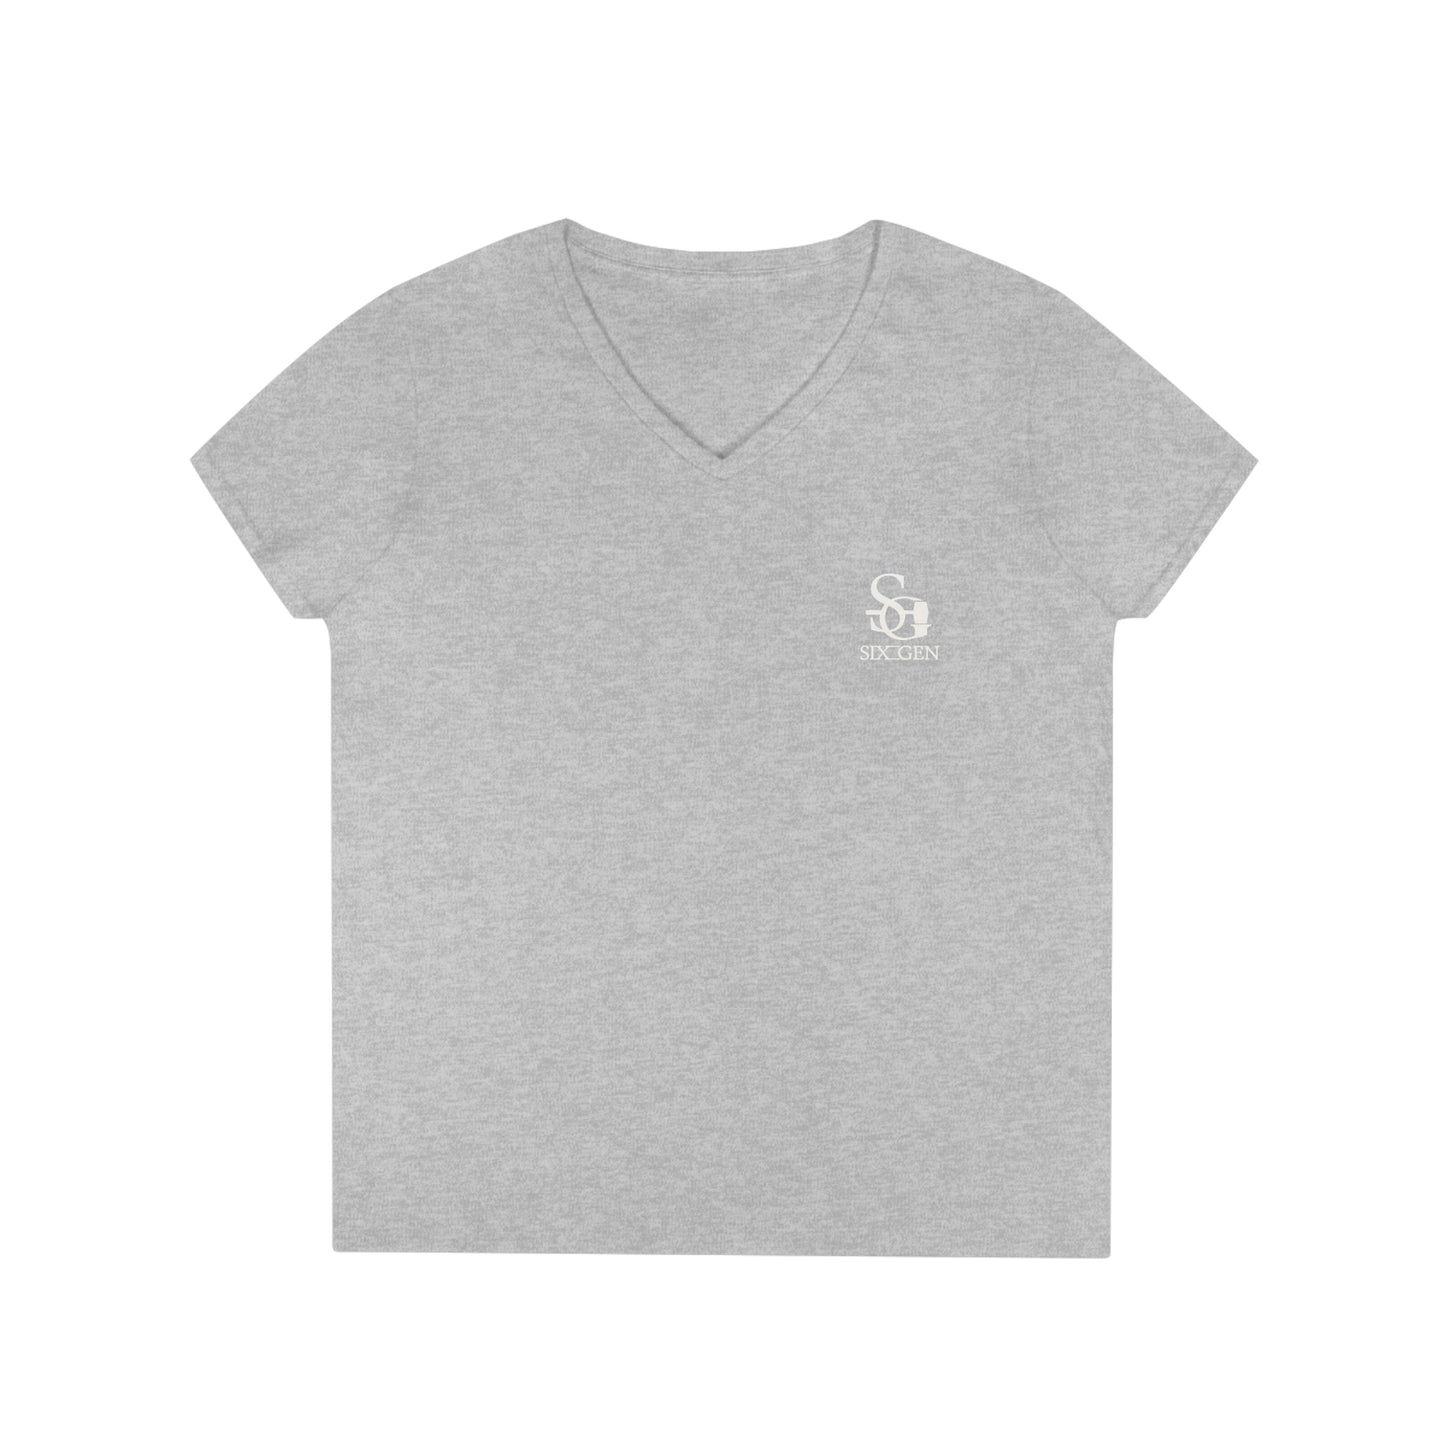 Six-Gen logo Ladies V Neck T Shirt